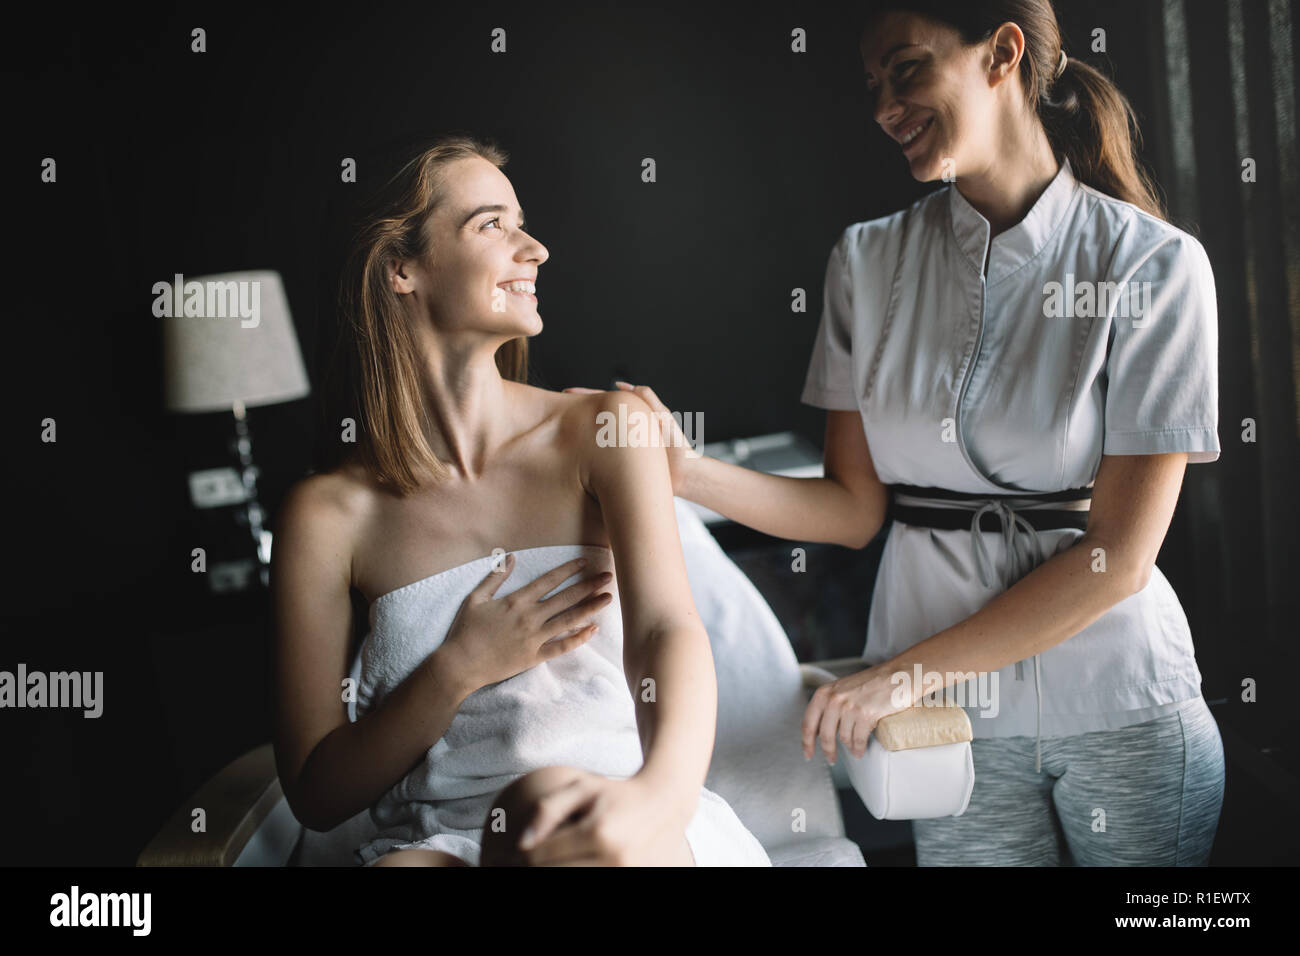 Woman enjoying skin and face treatment and massage Stock Photo